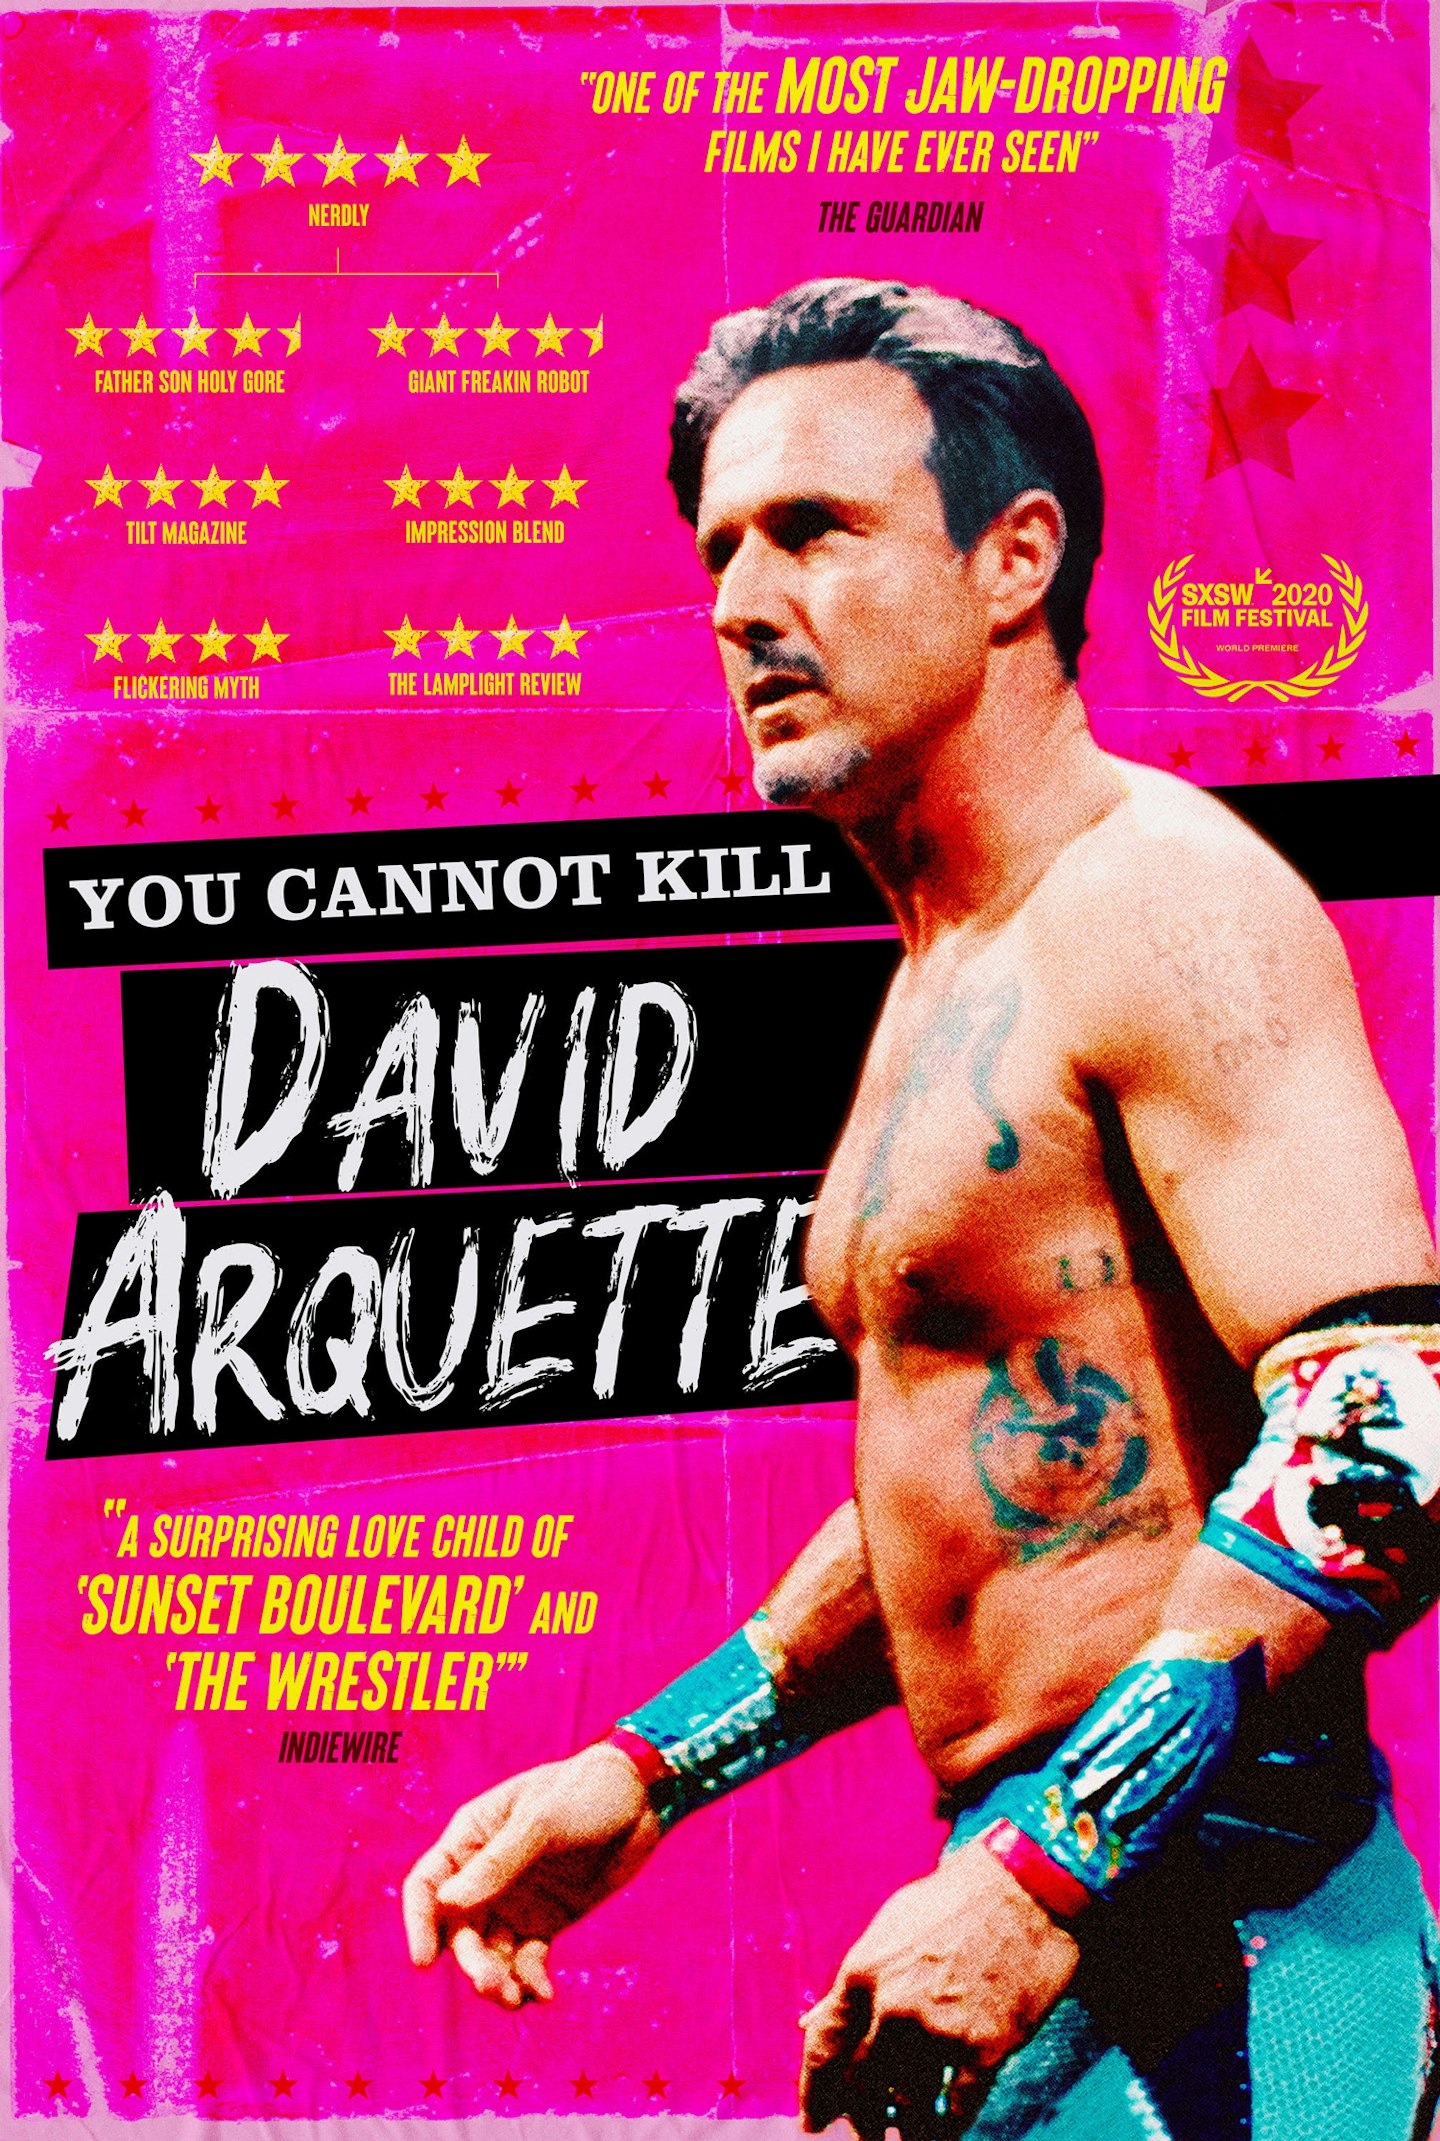 You Cannot Kill David Arquette poster